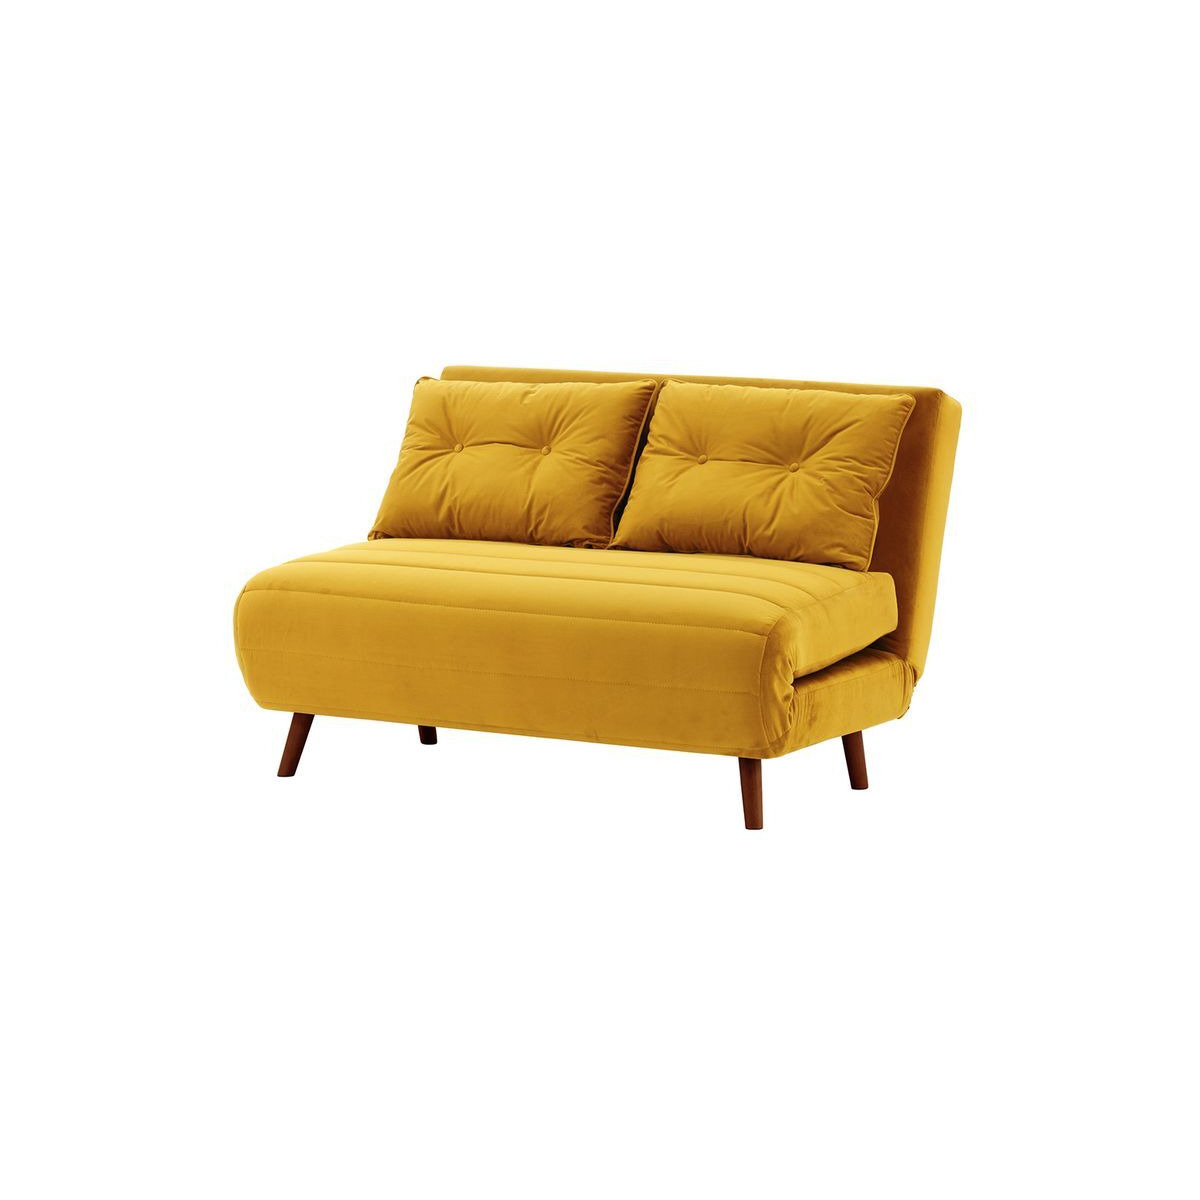 Flic Double Sofa Bed - width 120 cm, mustard, Leg colour: aveo - image 1